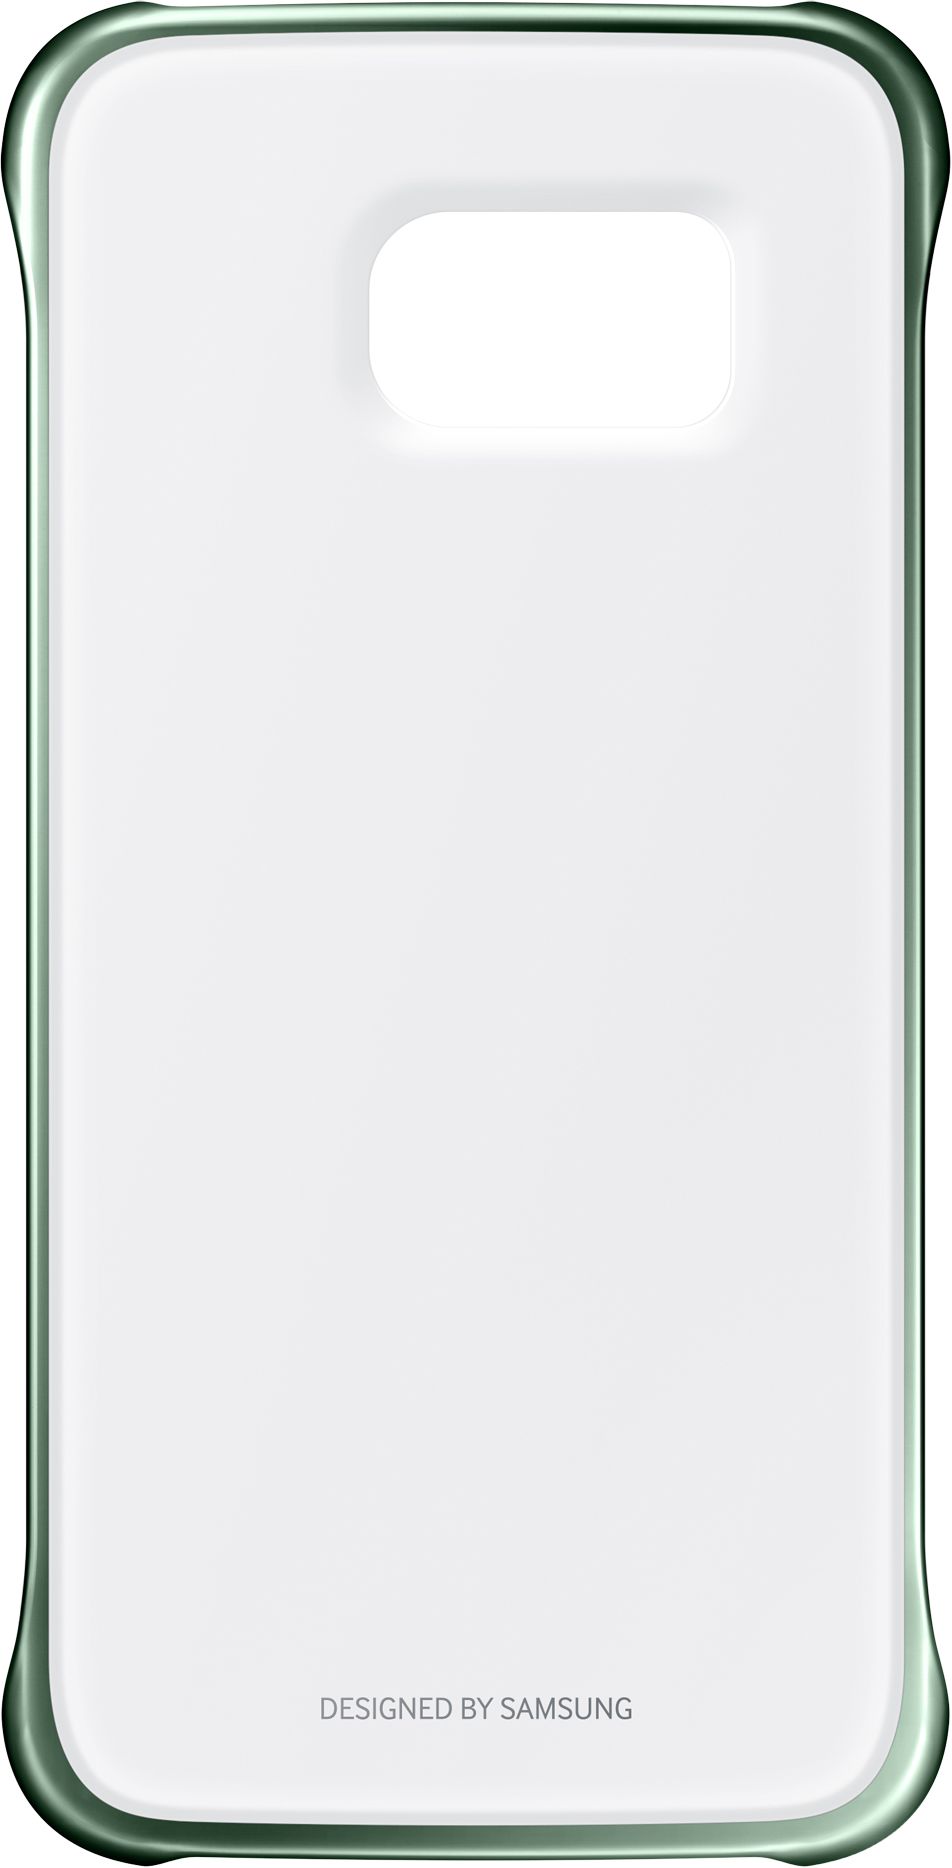 Samsung Накладка Protective Cover Clear для Samsung Galaxy S6 Edge SM-G925 (пластик)